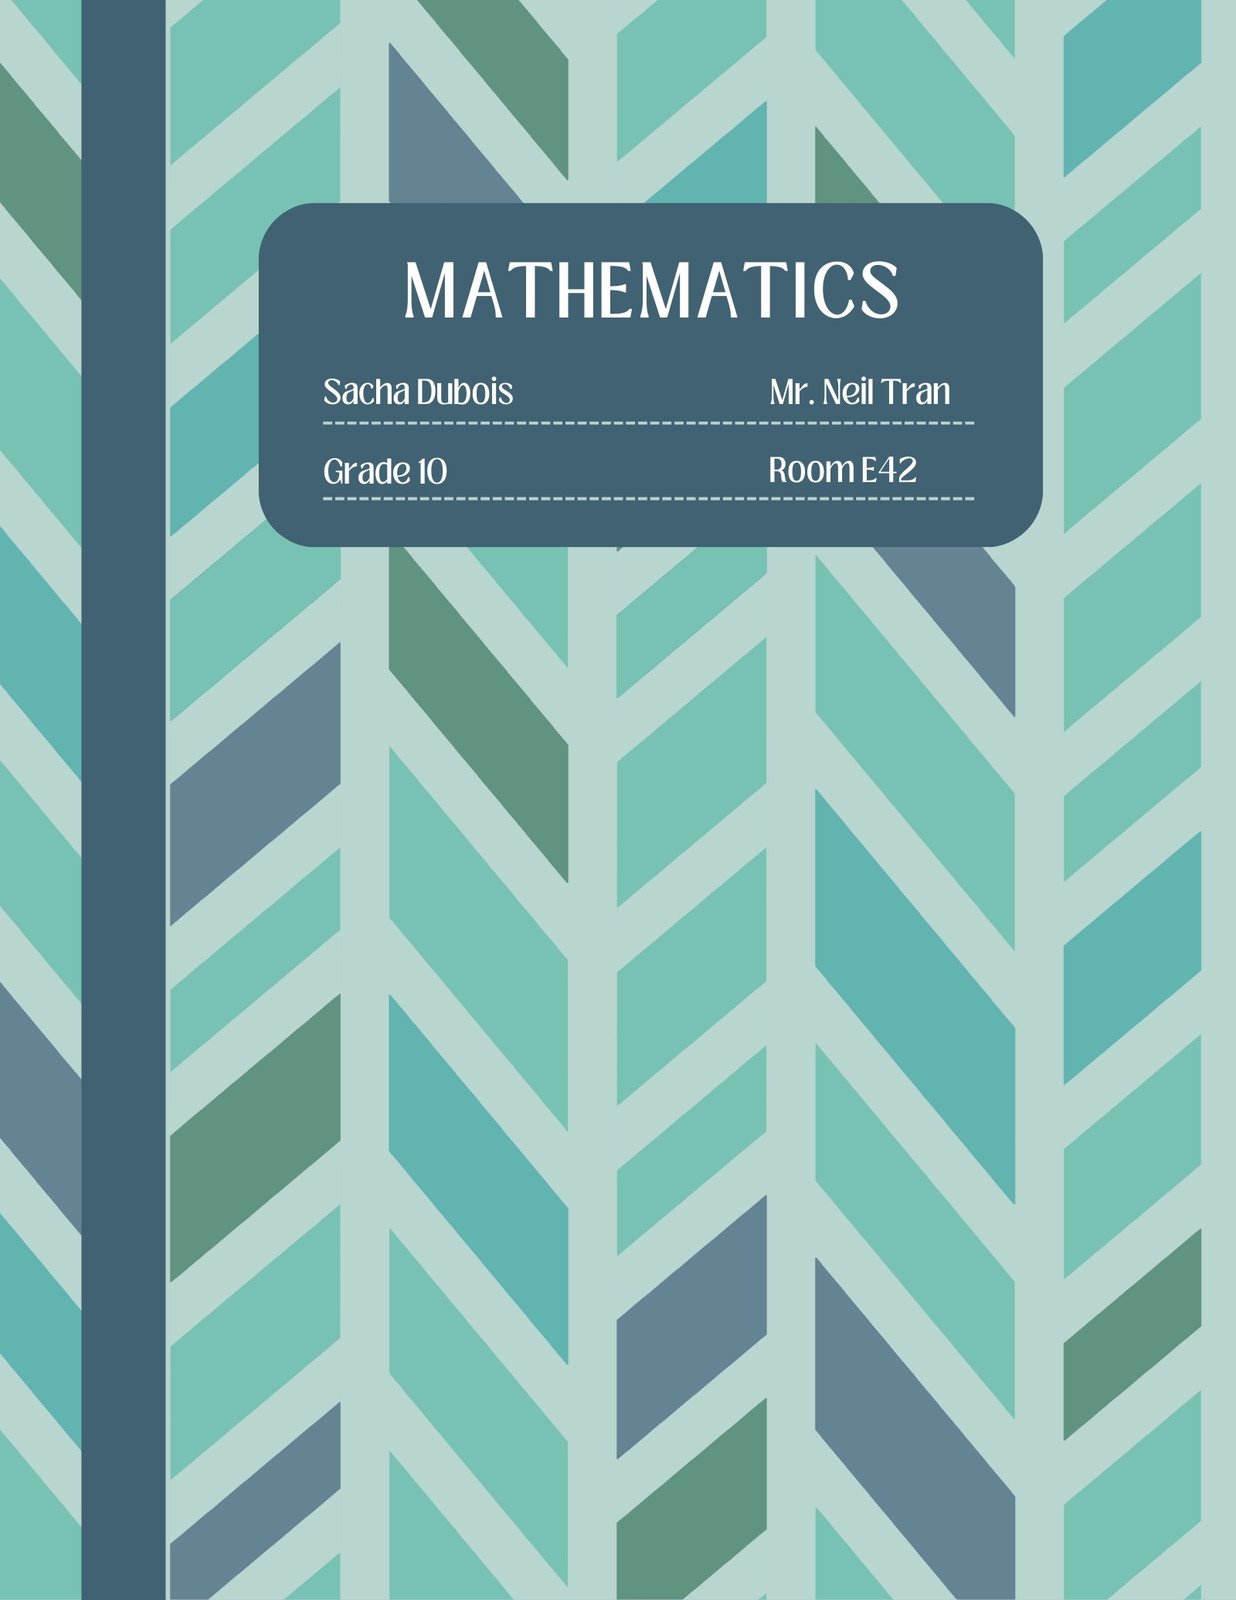 math notebook cover